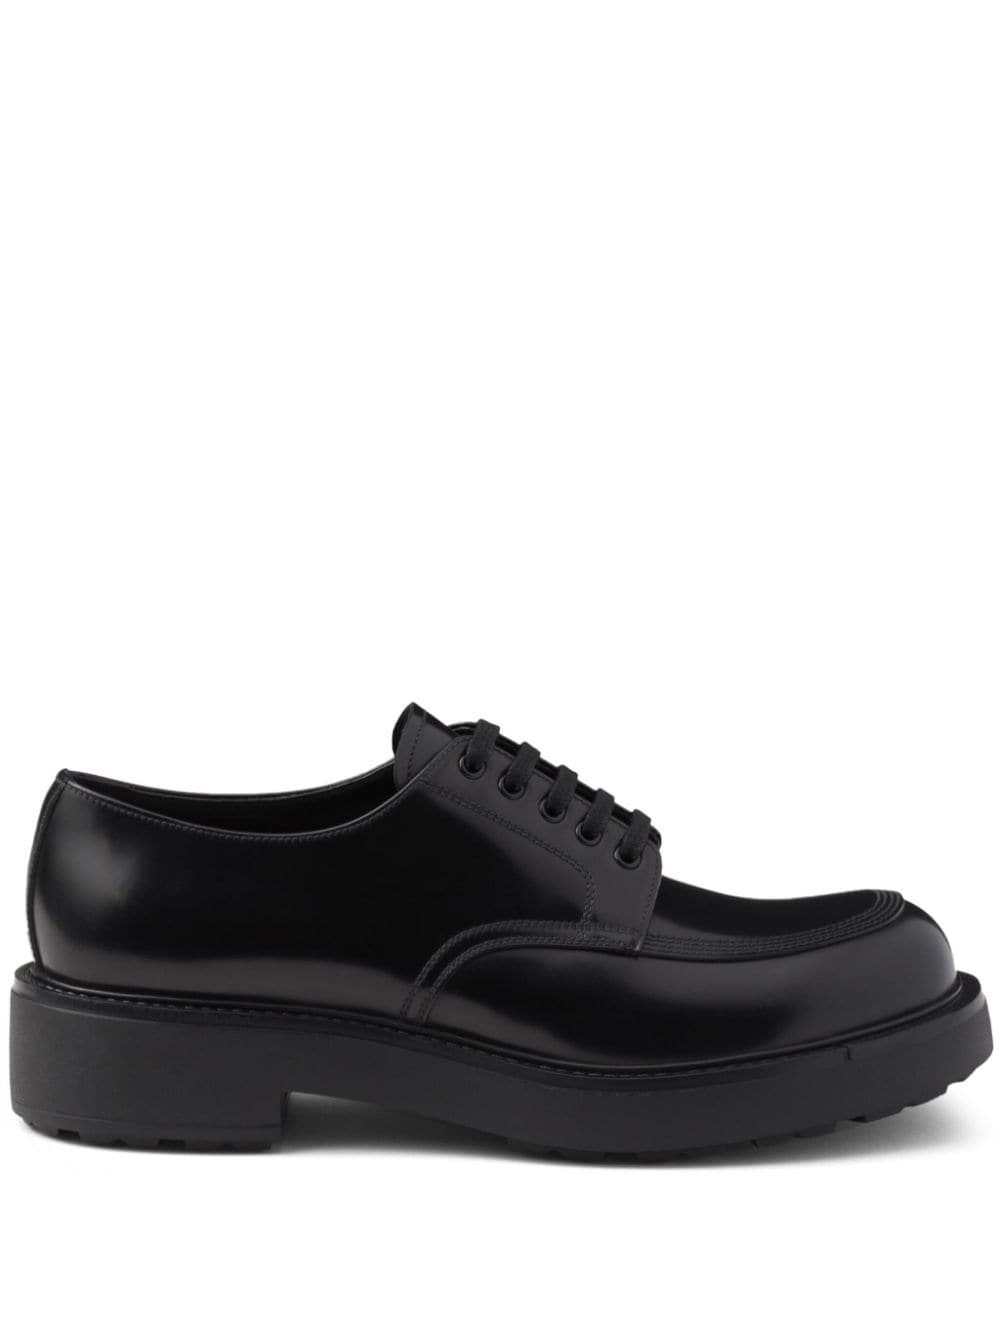 Prada polished leather derby shoes Black